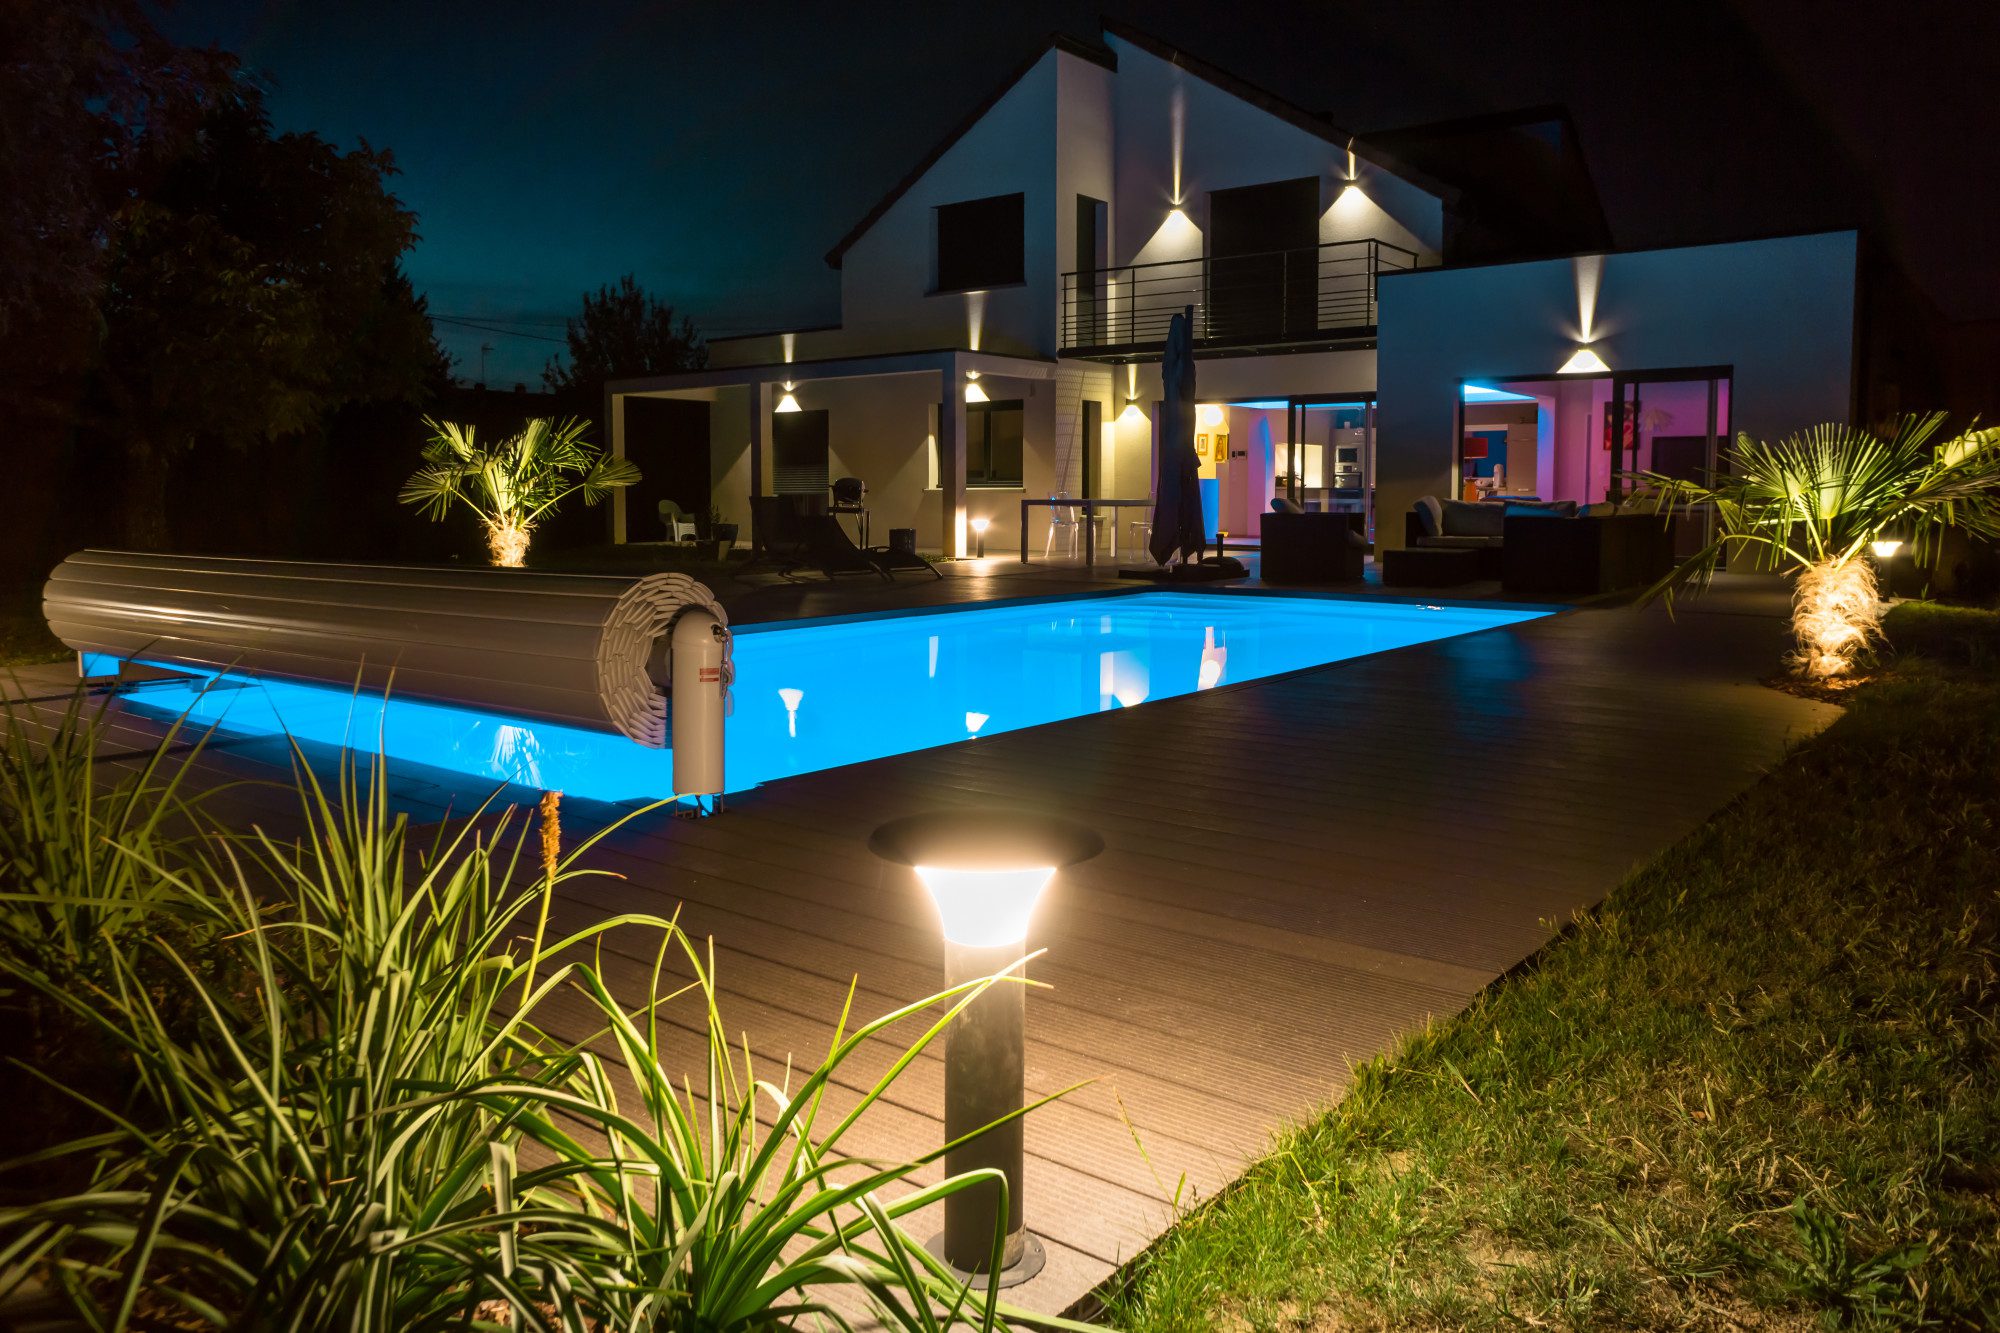 Illuminate Your Backyard Oasis with LED Pool Lighting